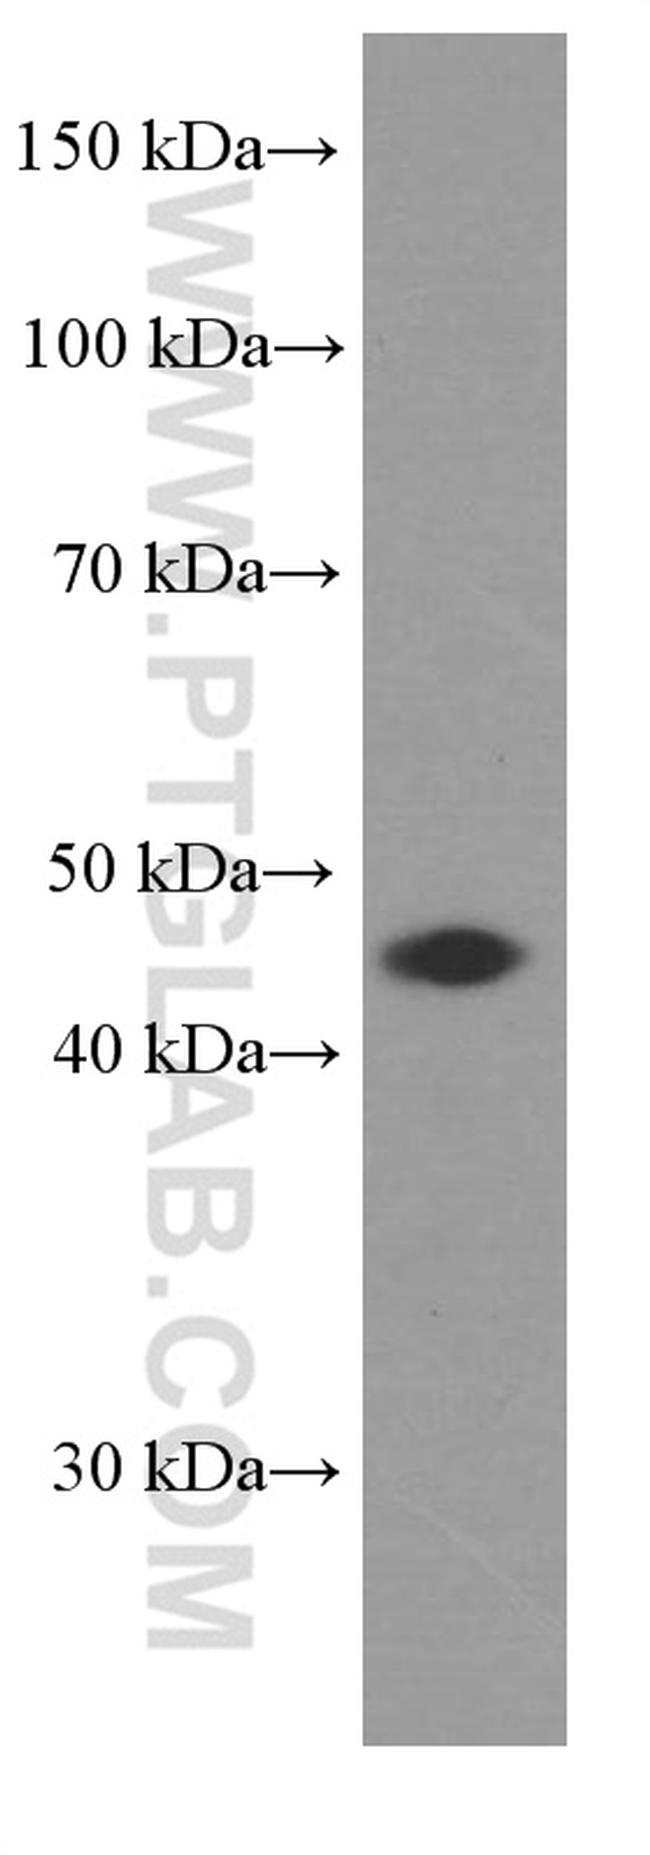 BSAP/PAX5 Antibody in Western Blot (WB)